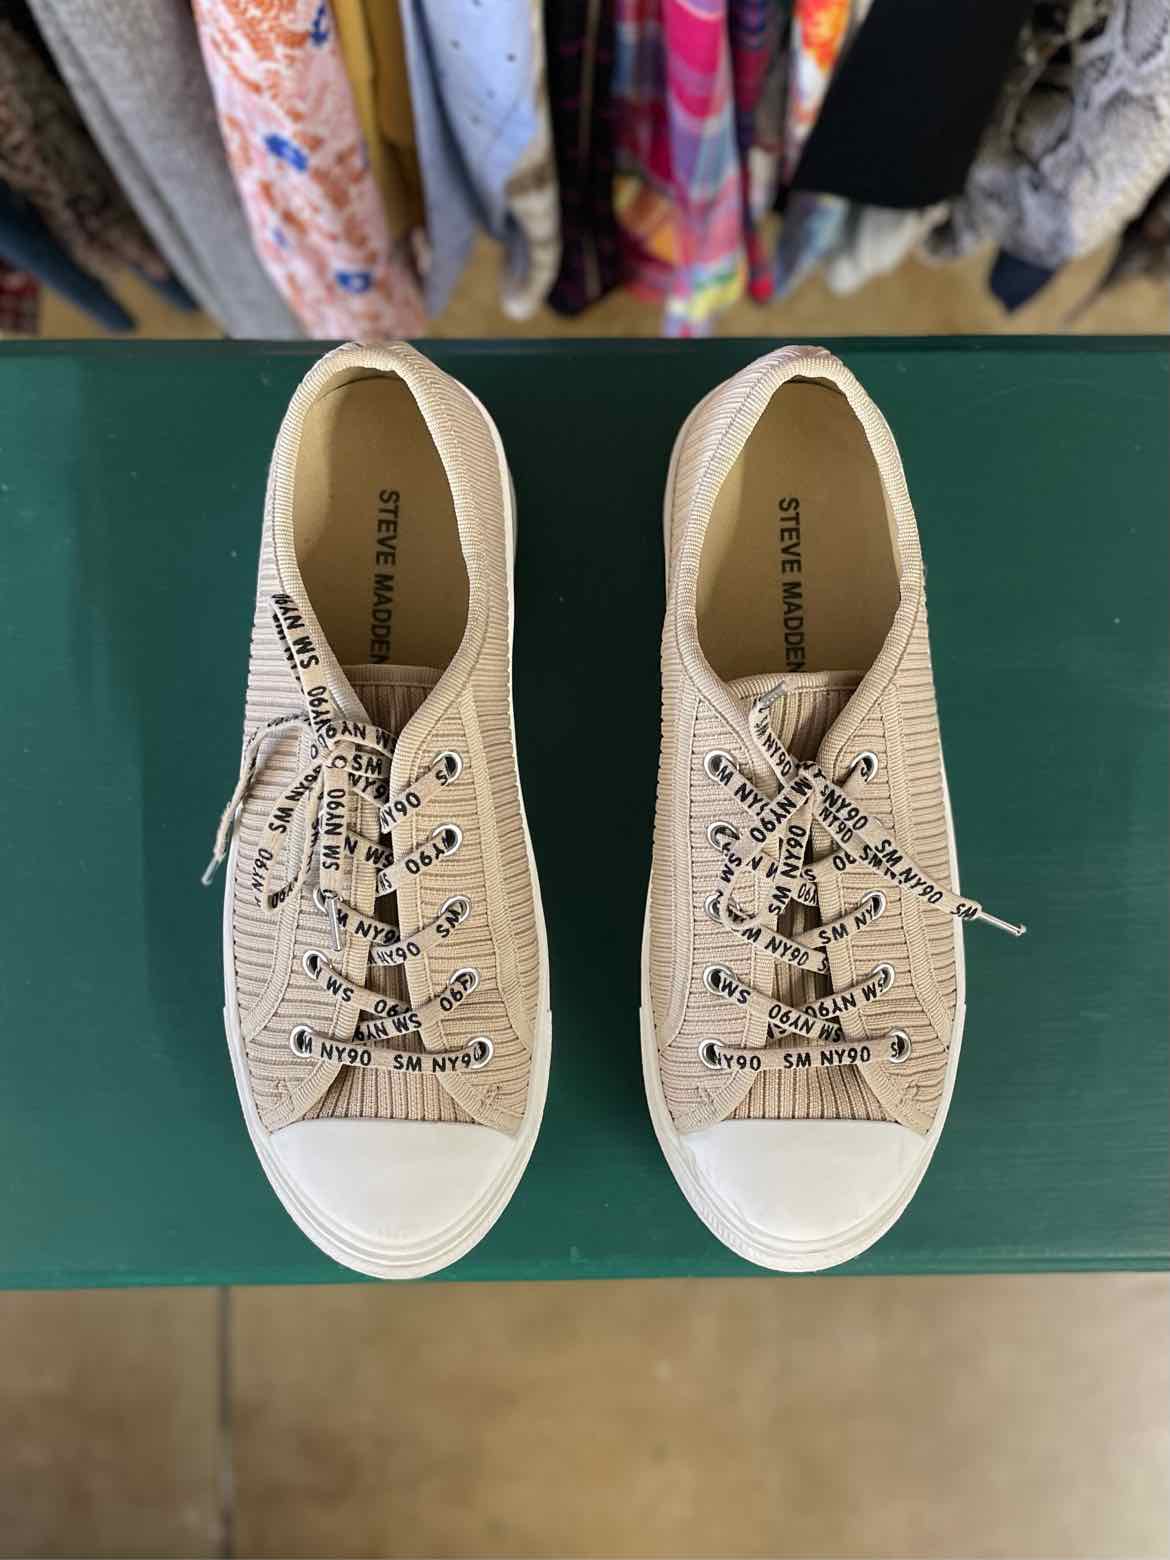 Steve Madden Shoe Size 7 Tan/White Sneakers